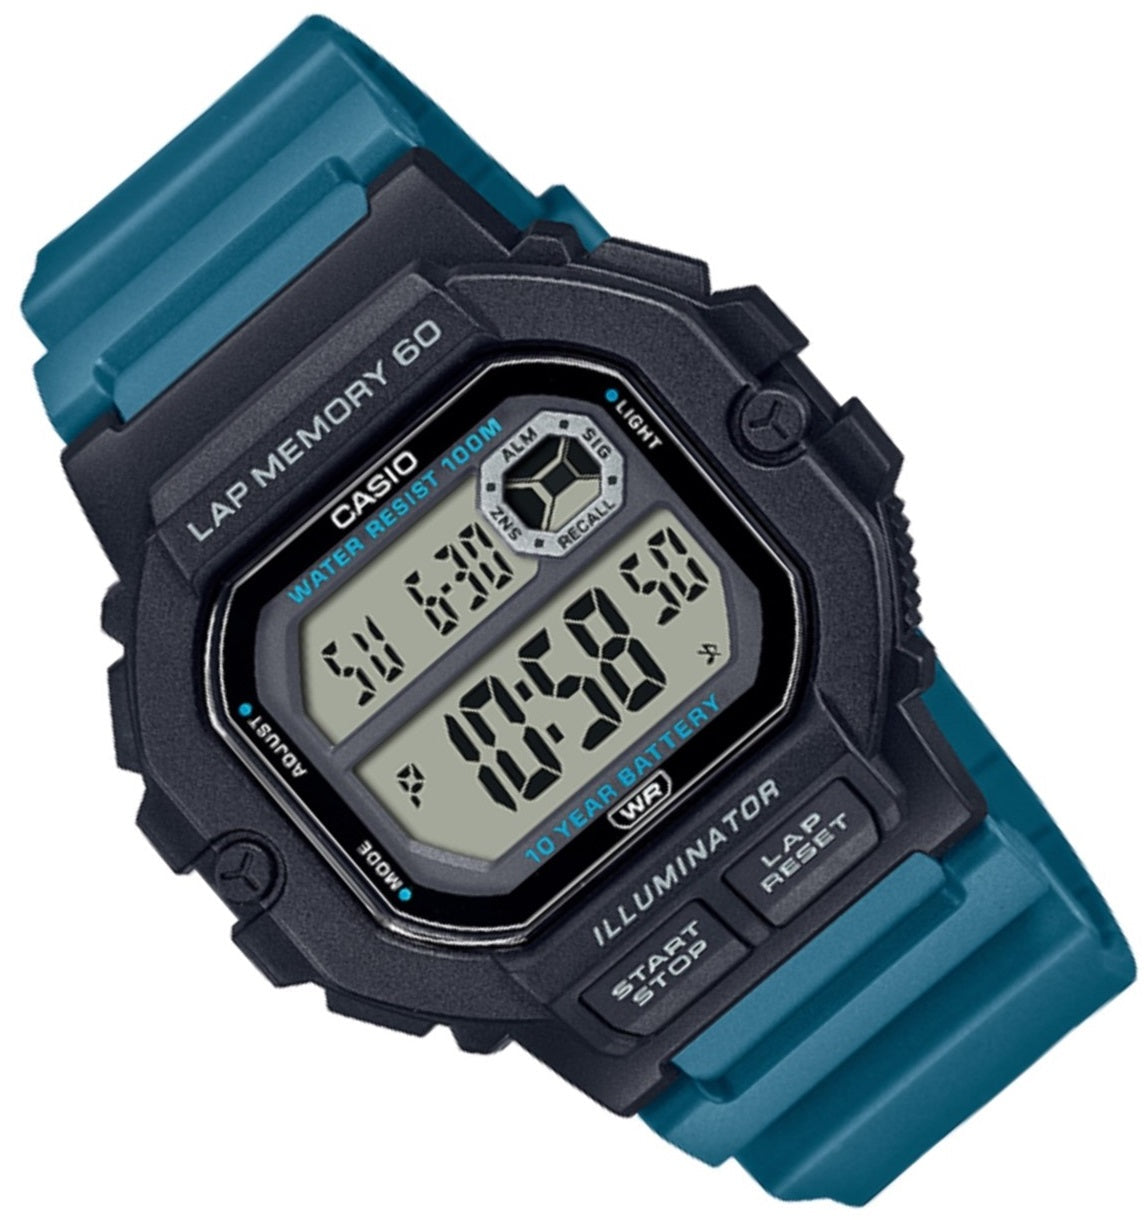 Casio WS-1400H-3A Aqua Blue Resin Strap Watch for Men-Watch Portal Philippines